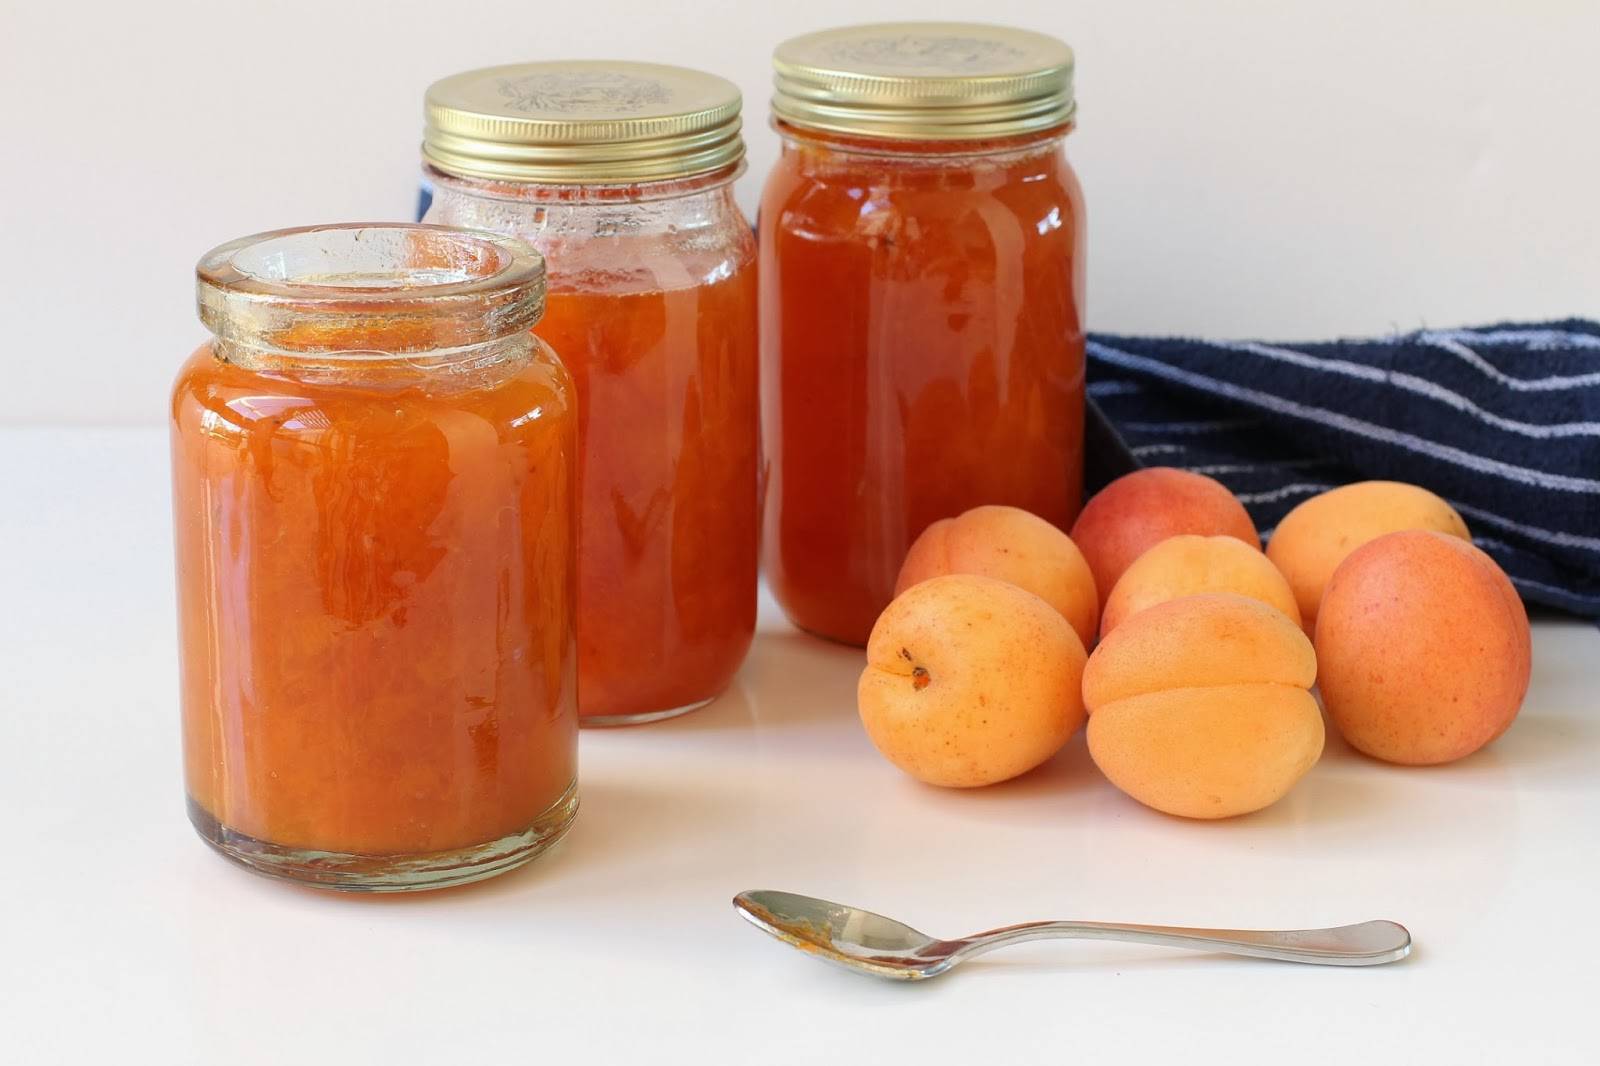 ТОП 10 пошаговых рецептов абрикосового повидла на зиму в домашних условиях